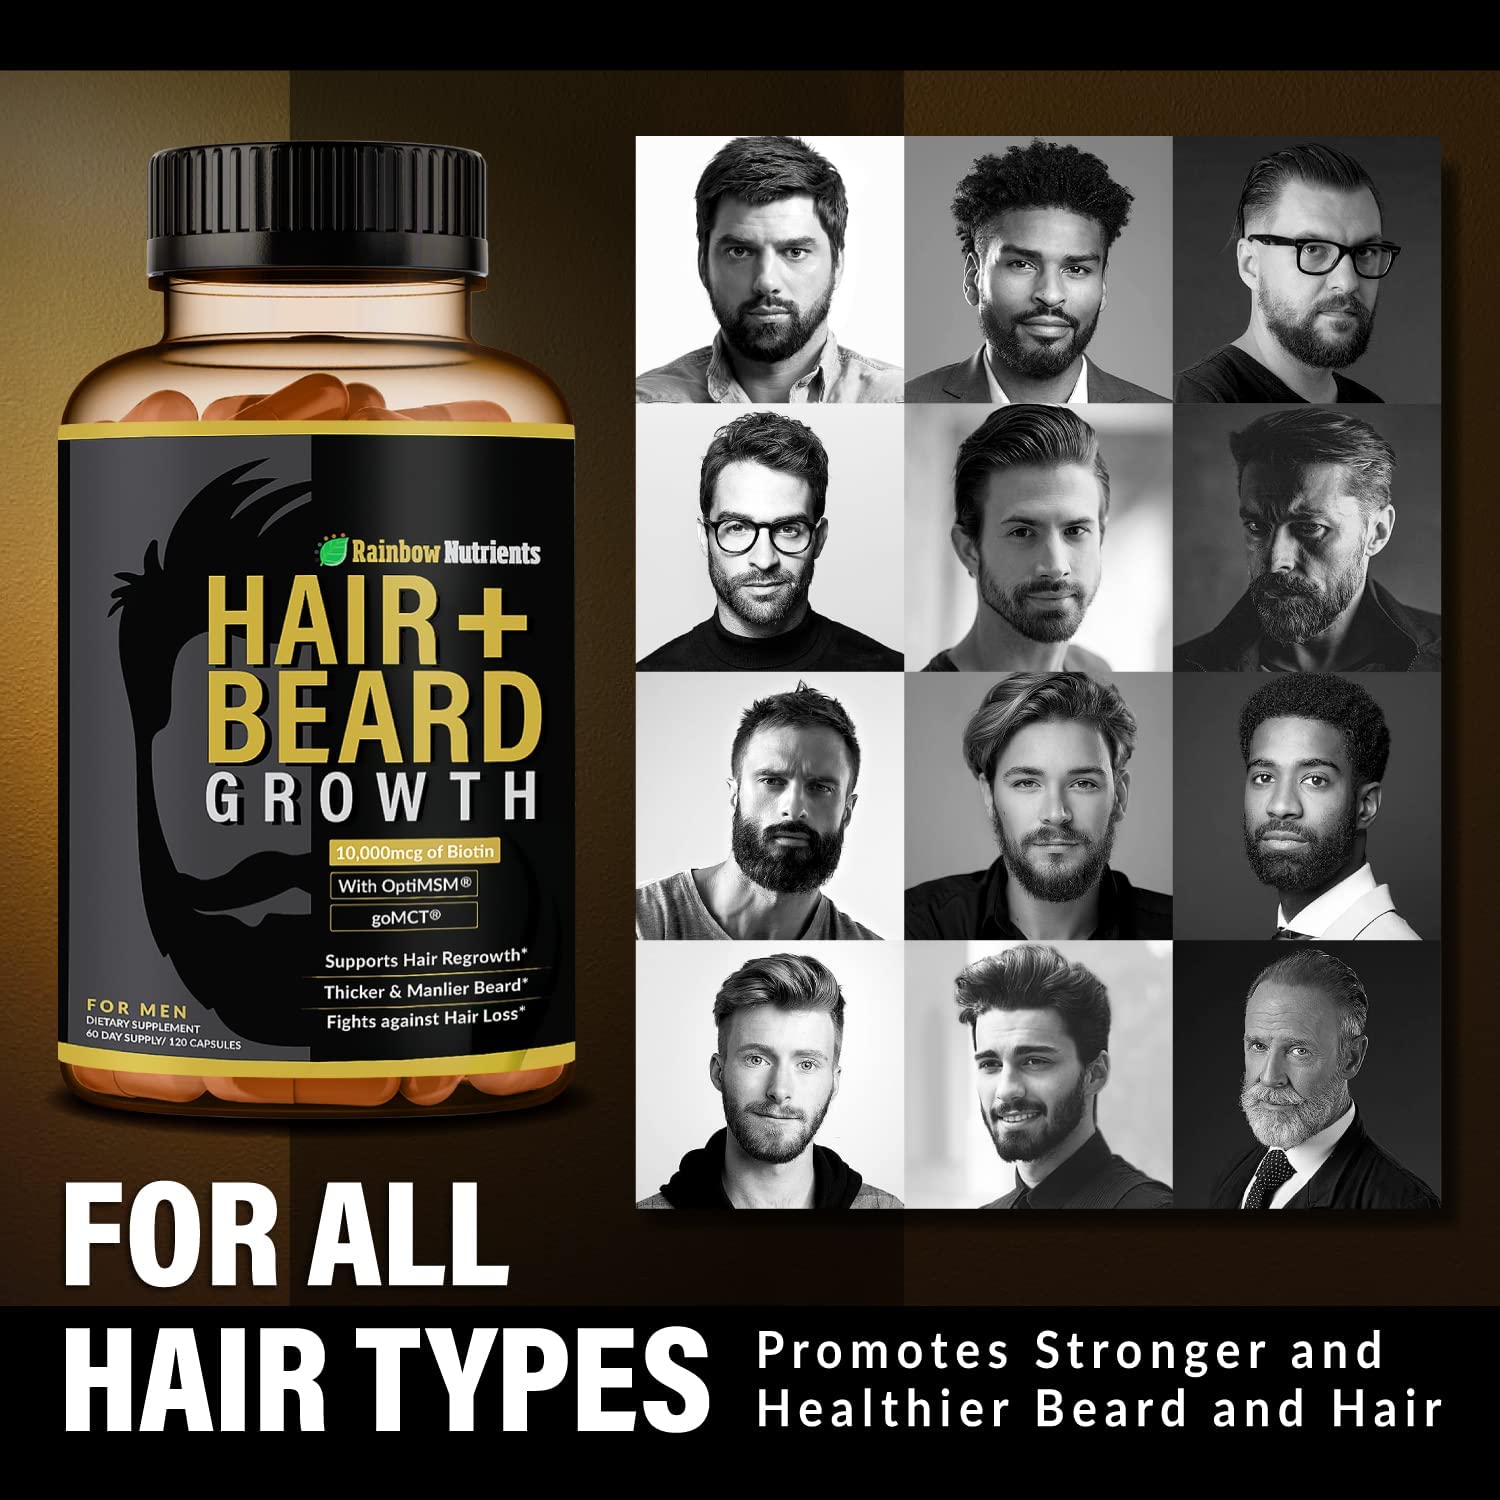 Hair + Beard Growth Supplement